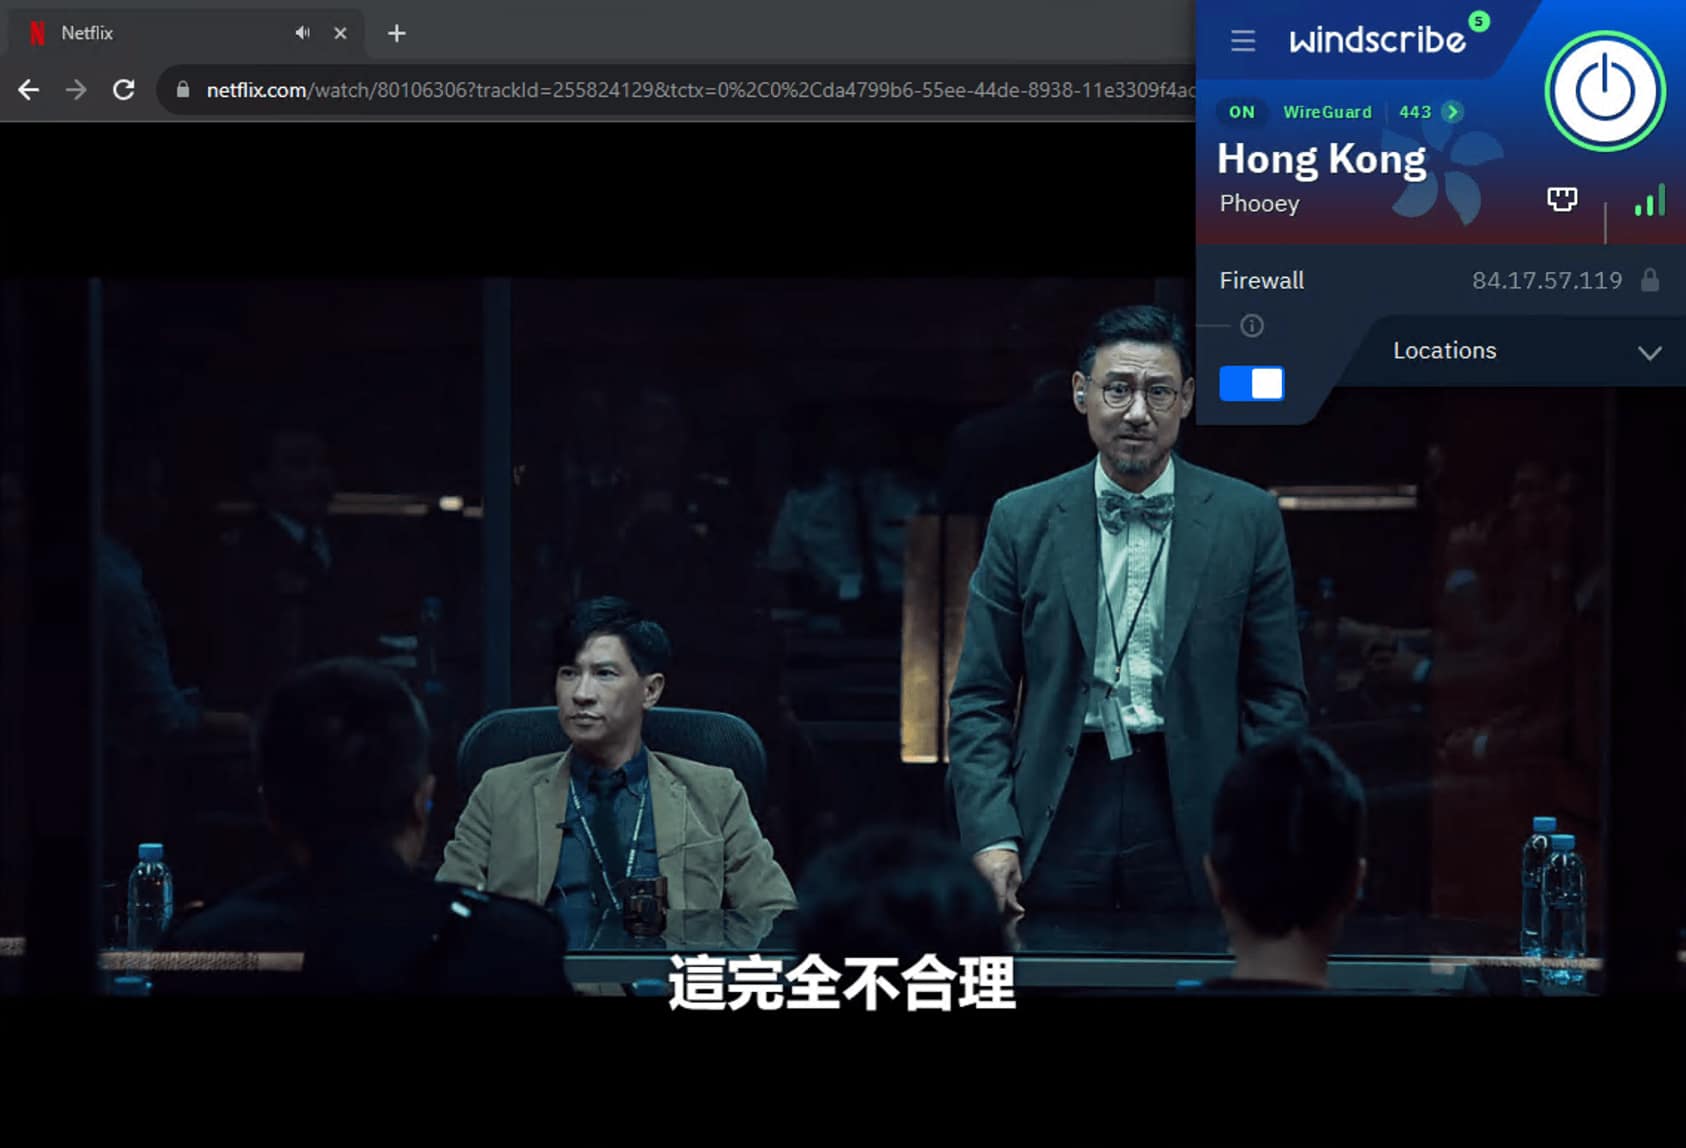 Streaming Hong Kong Netflix while connected to Windscribe's paid Hong Kong server. 